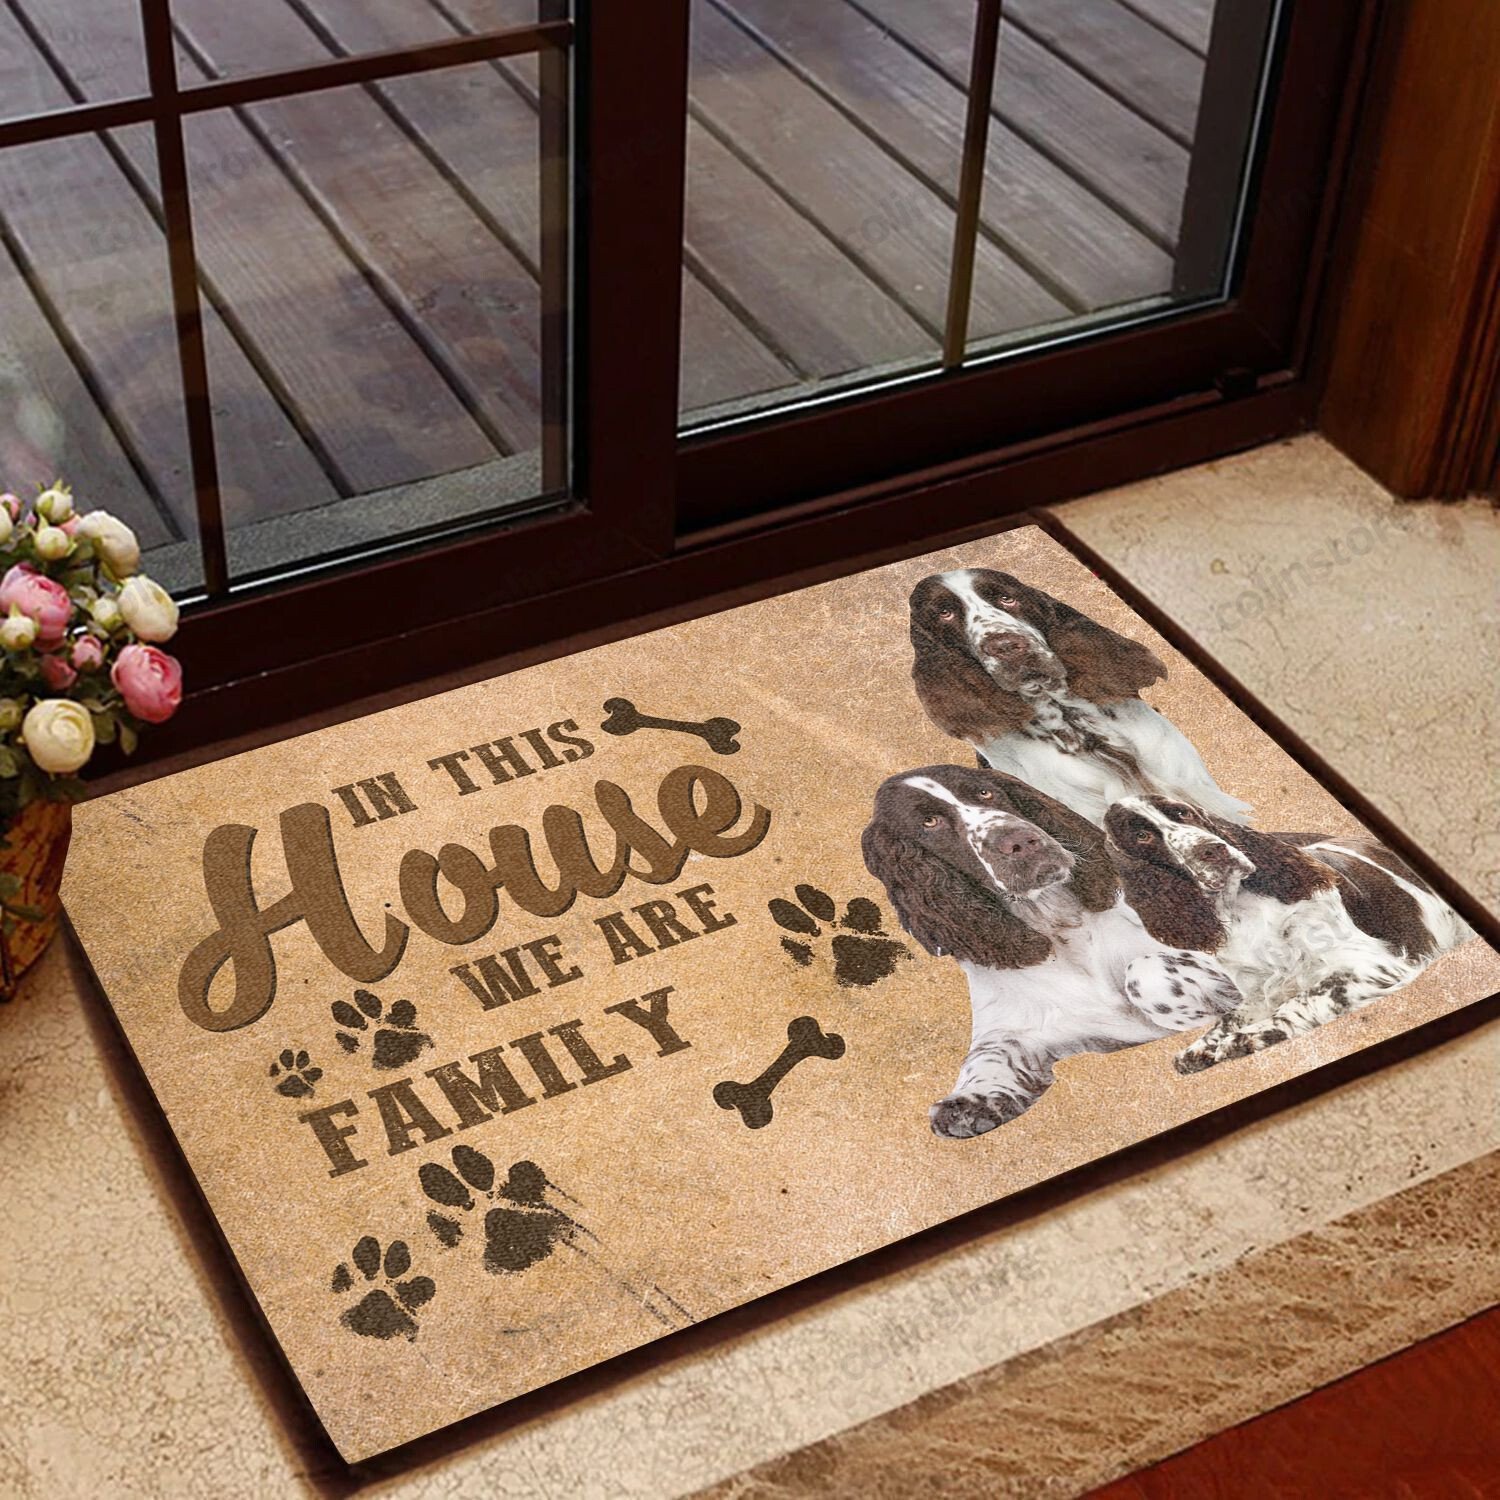 Amazing English Springer Spaniel Family - Dog Doormat Welcome Mat